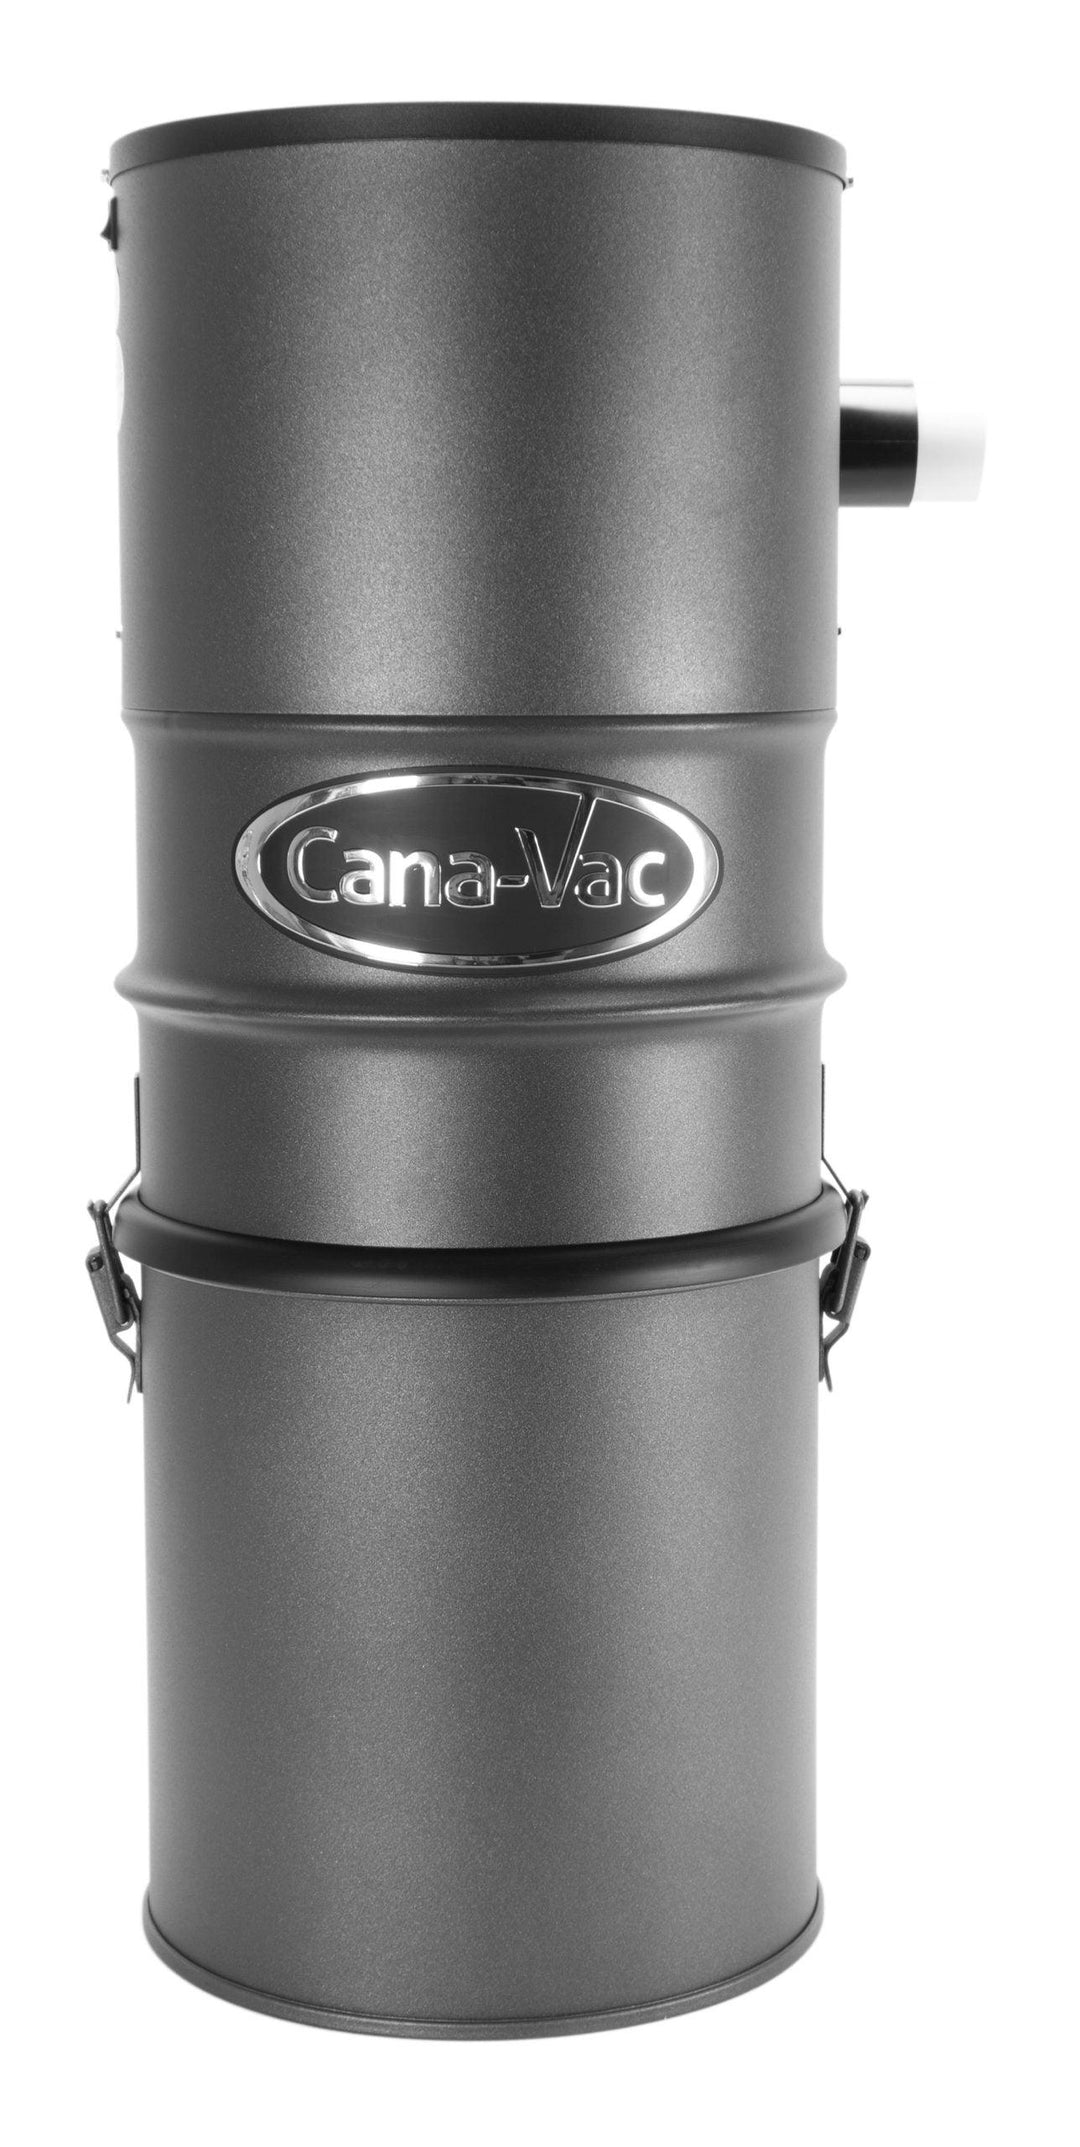 CanaVac CV587 Central Vacuum System - Geek Vacuums